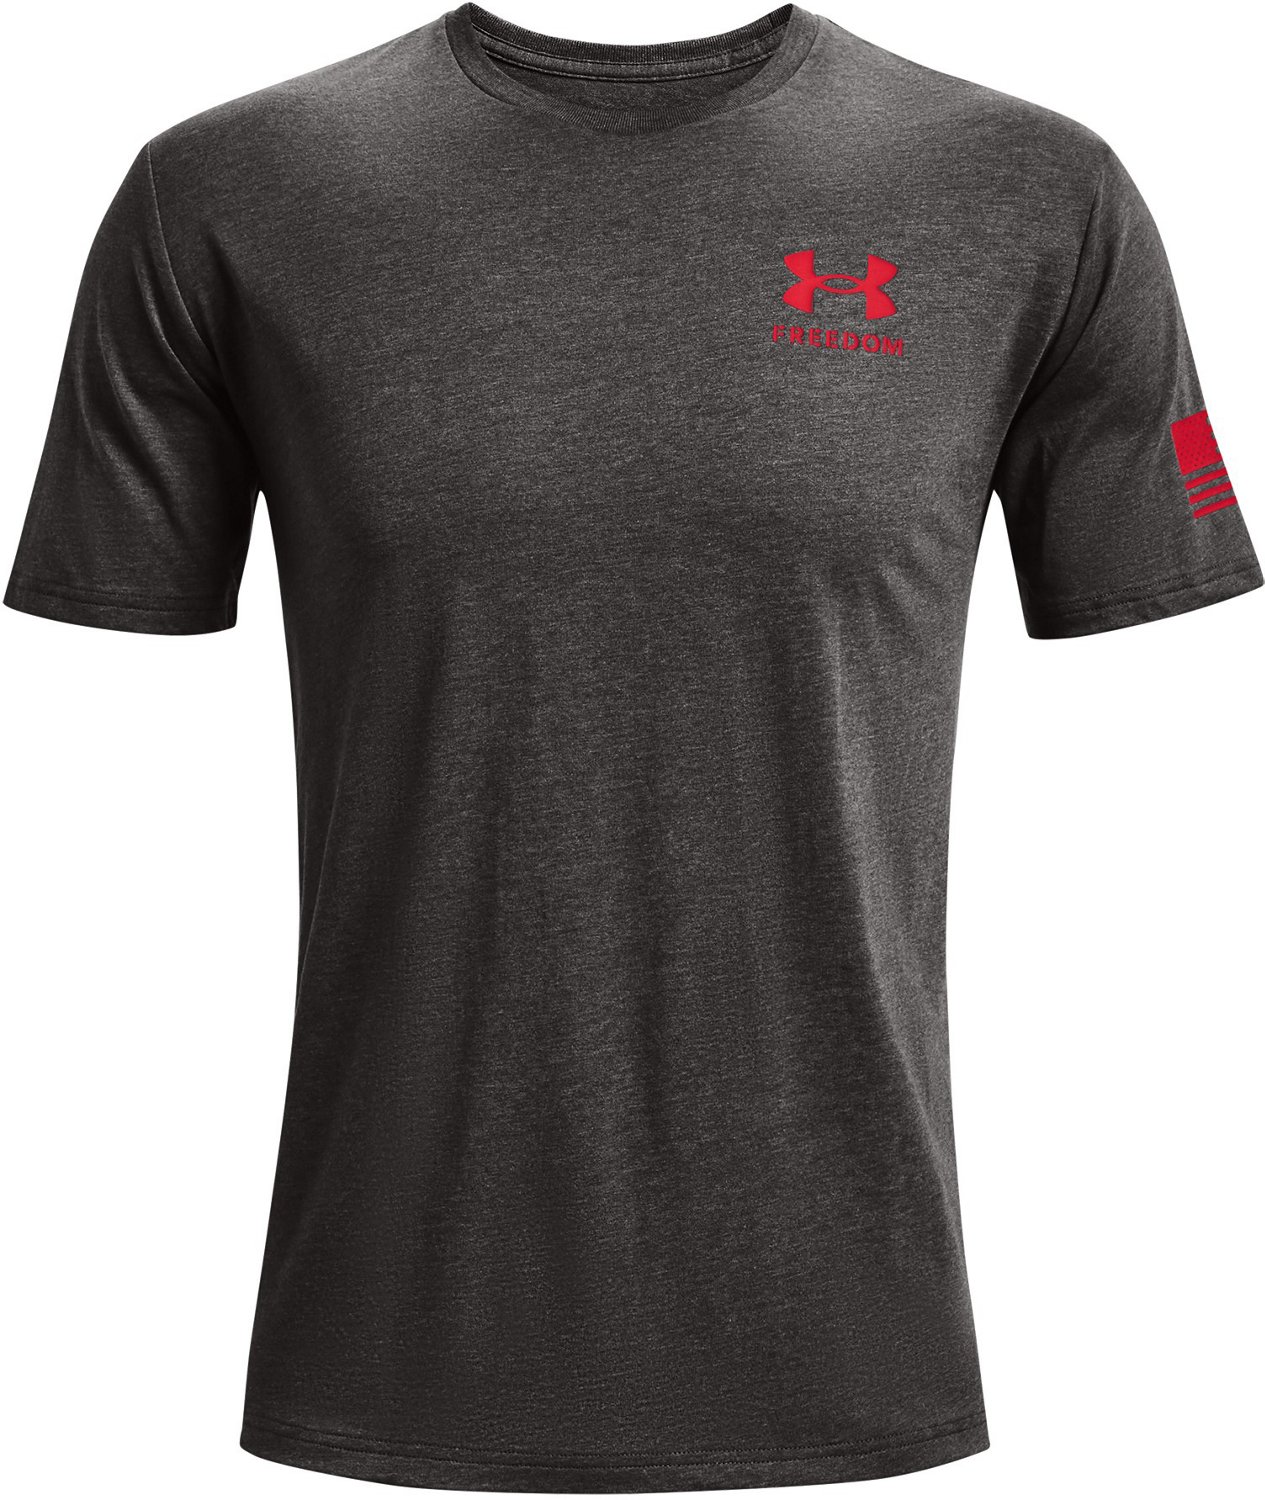 Under Armour 1370810 Men's Athletic UA Freedom Flag T-Shirt Short Sleeve  Tee